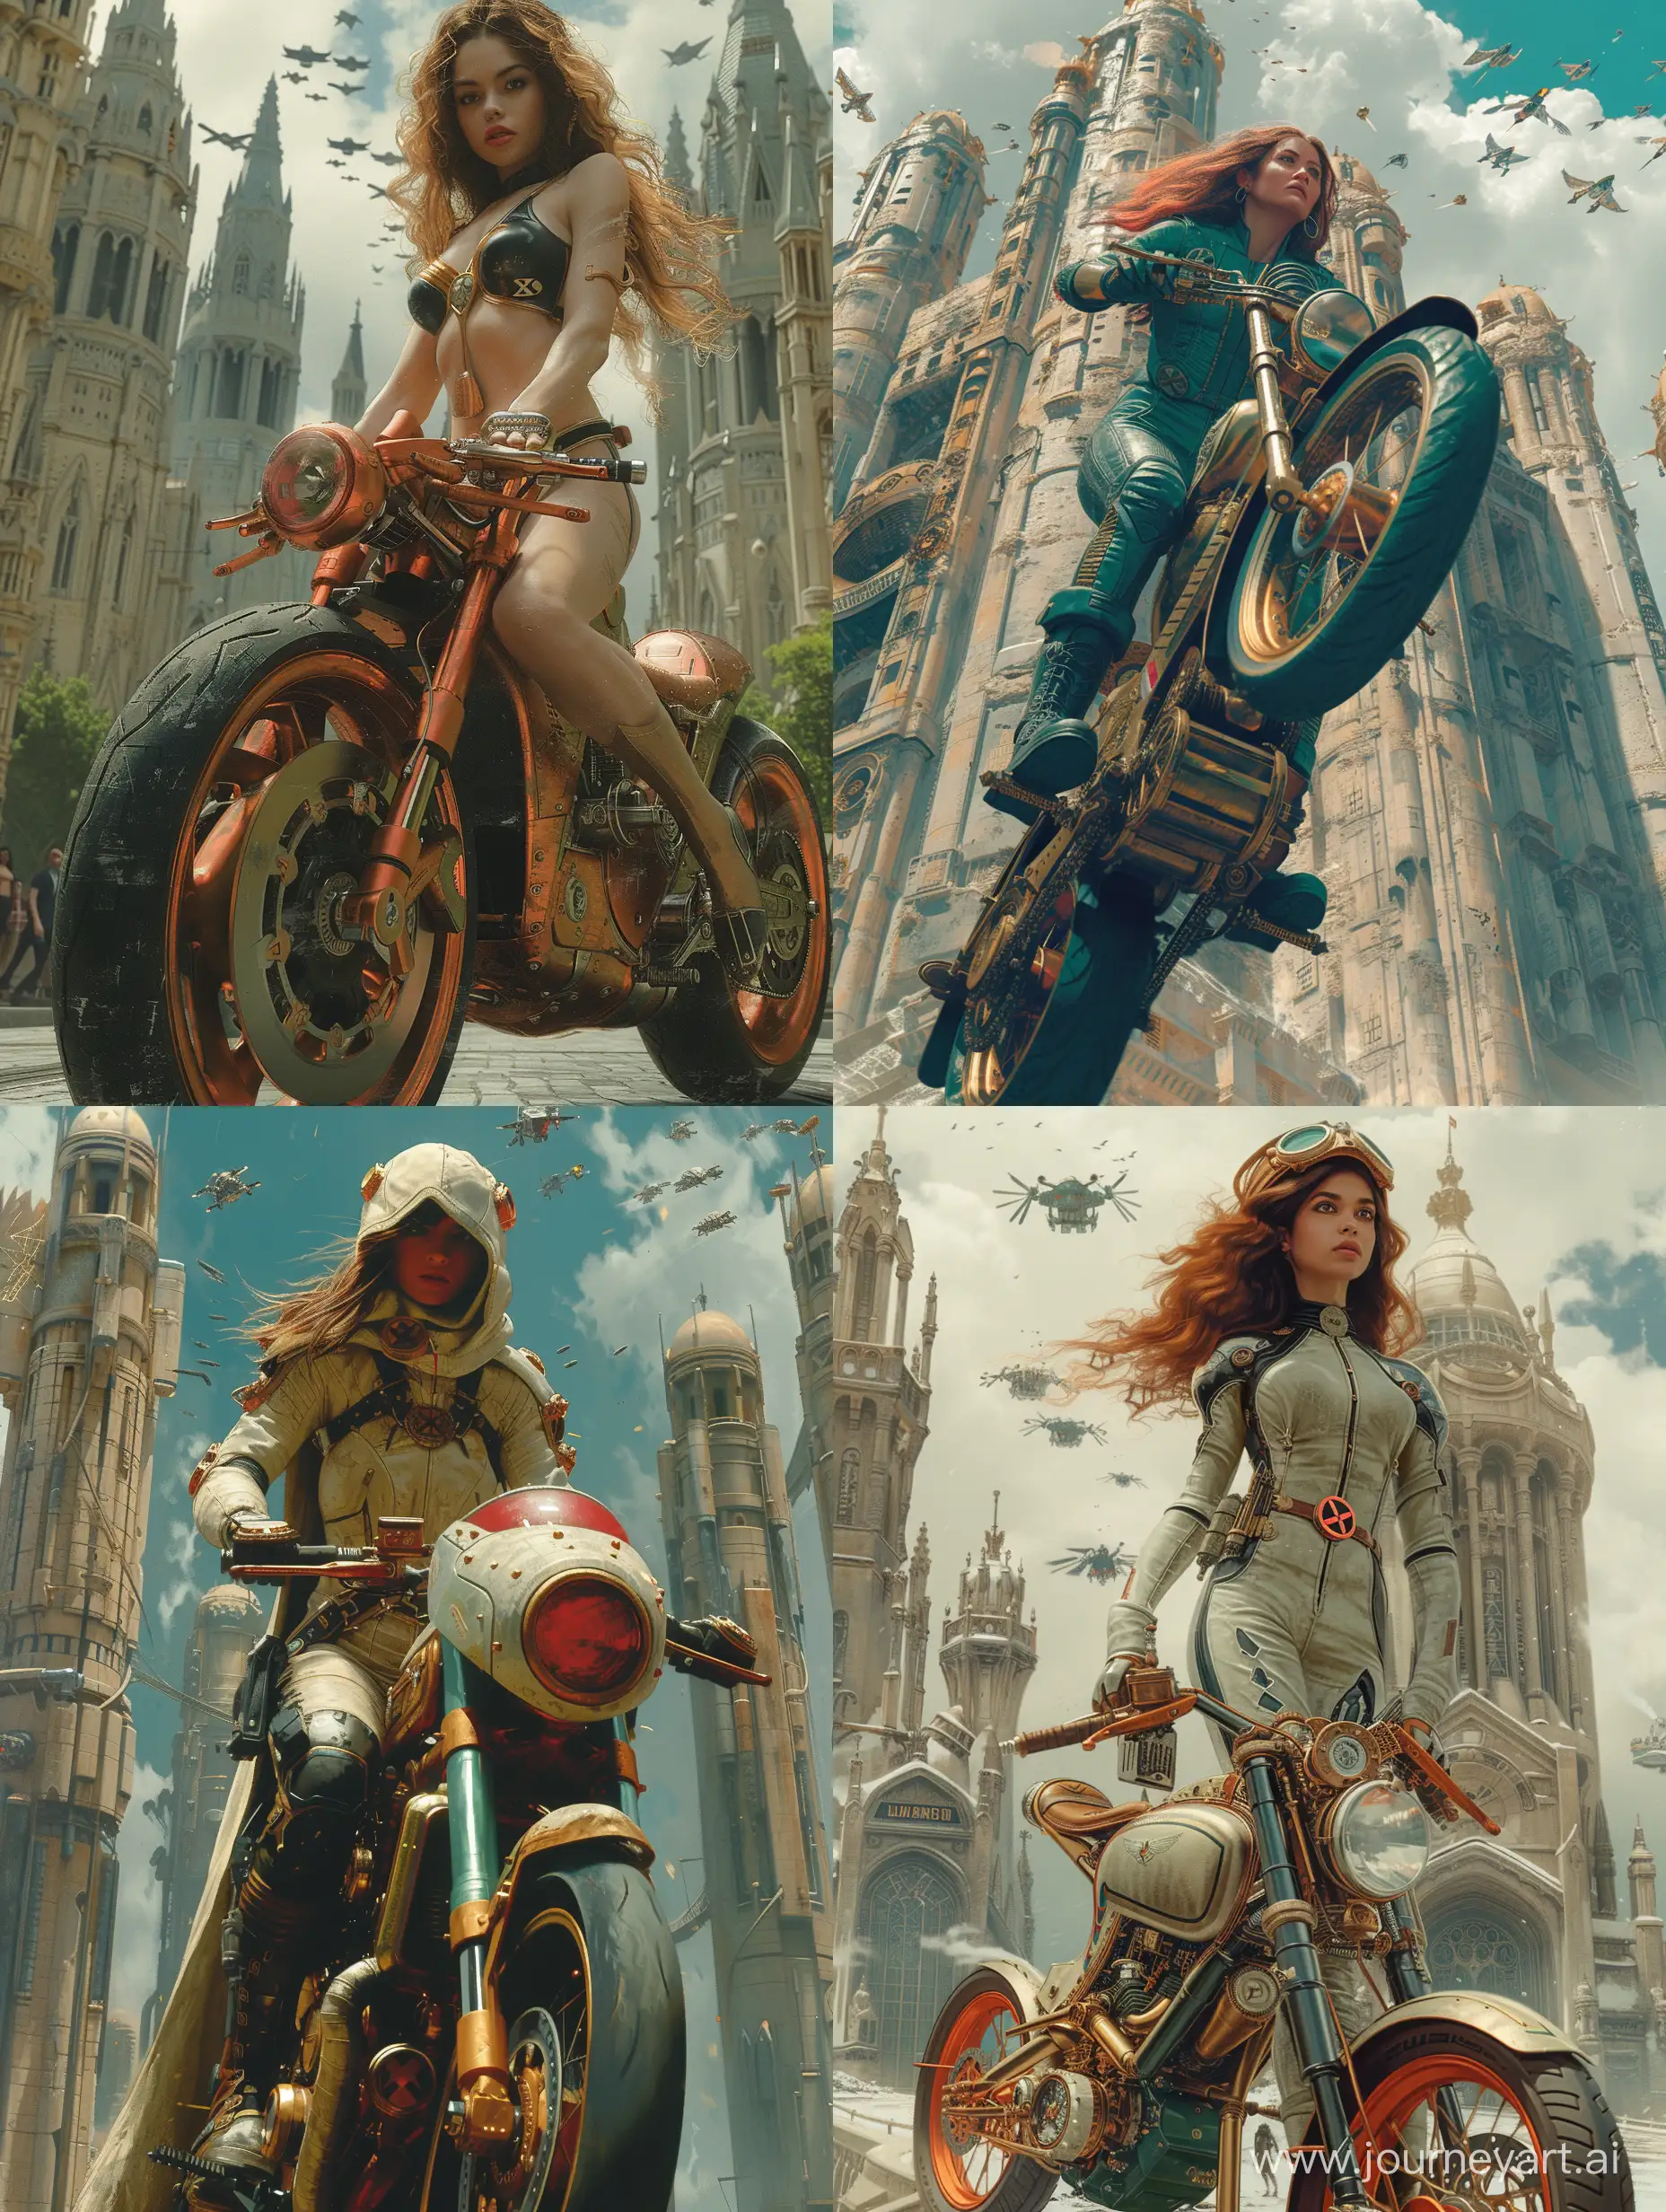 Futuristic-Steampunk-Amazon-Warrior-Riding-Motorcycle-Amid-Victorian-Era-Street-Towers